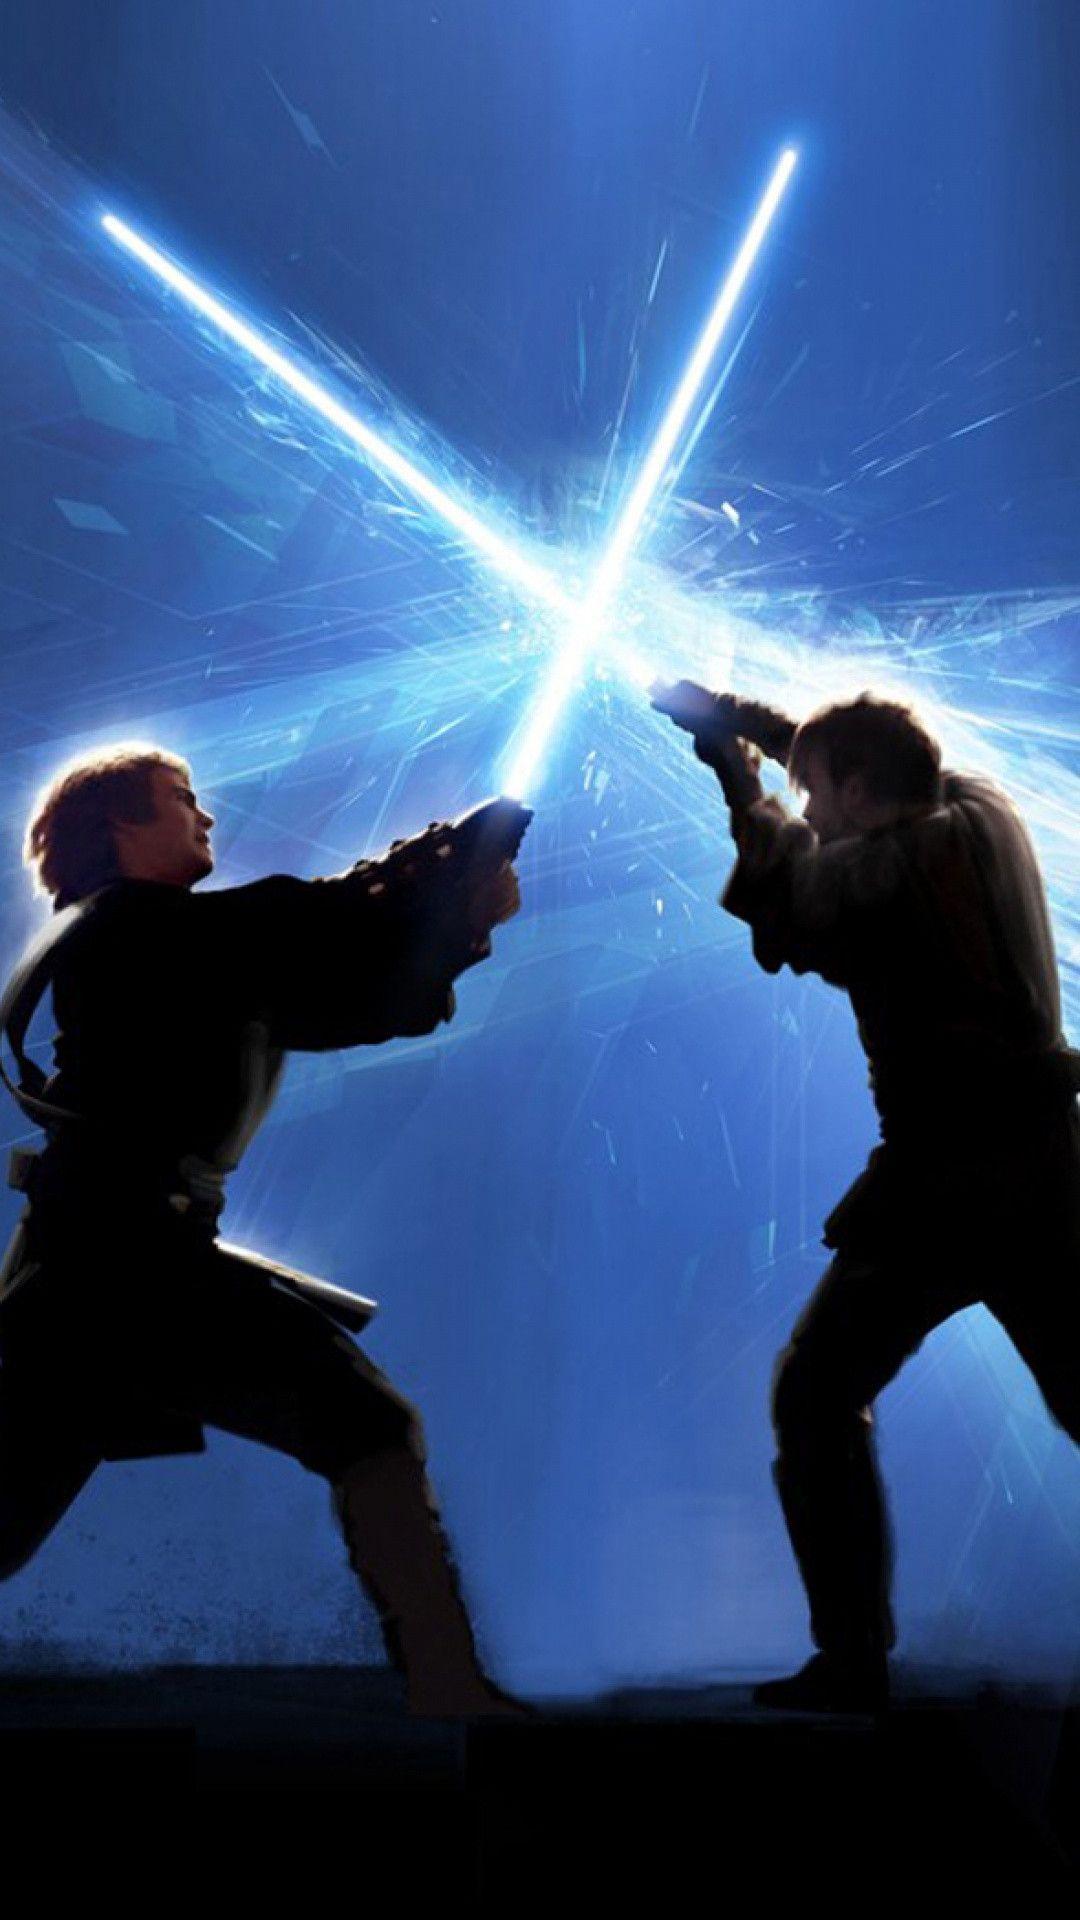 Anakin Vs Obi Wan: Battle Of The Heroes Wars Episode